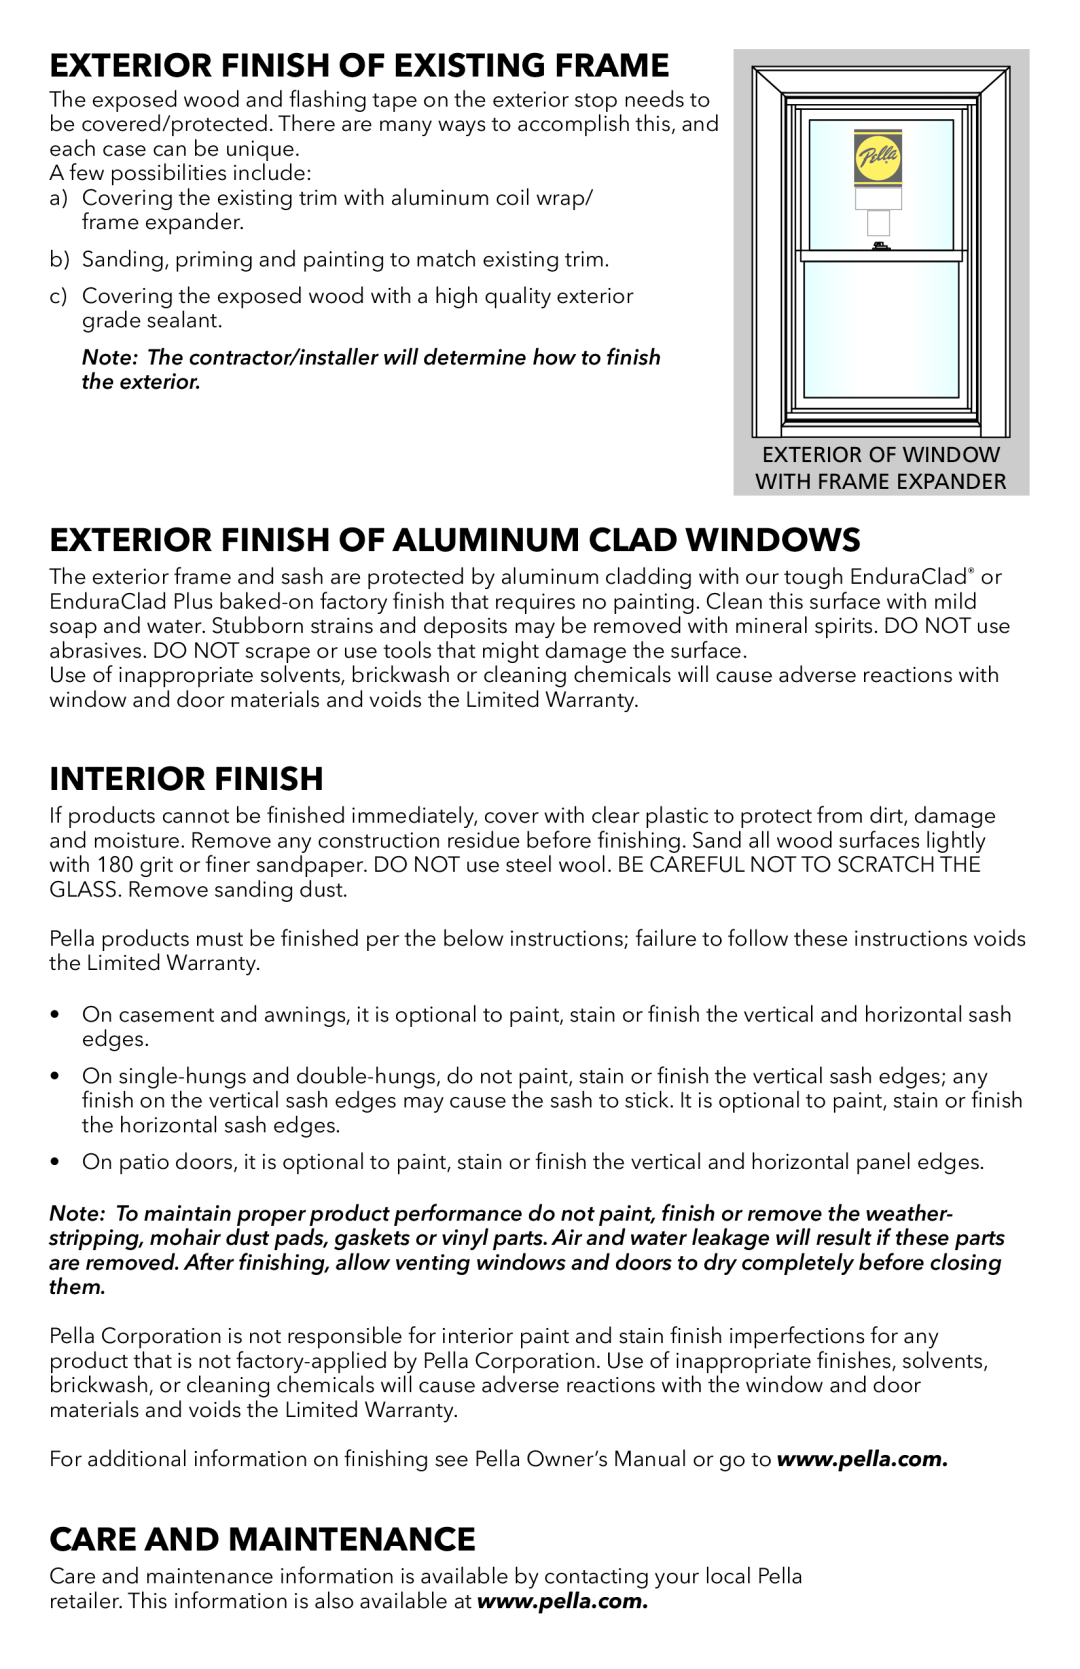 Pella 80WW0101 warranty Exterior Finish Of Existing Frame, Exterior Finish Of Aluminum Clad Windows, Interior Finish 